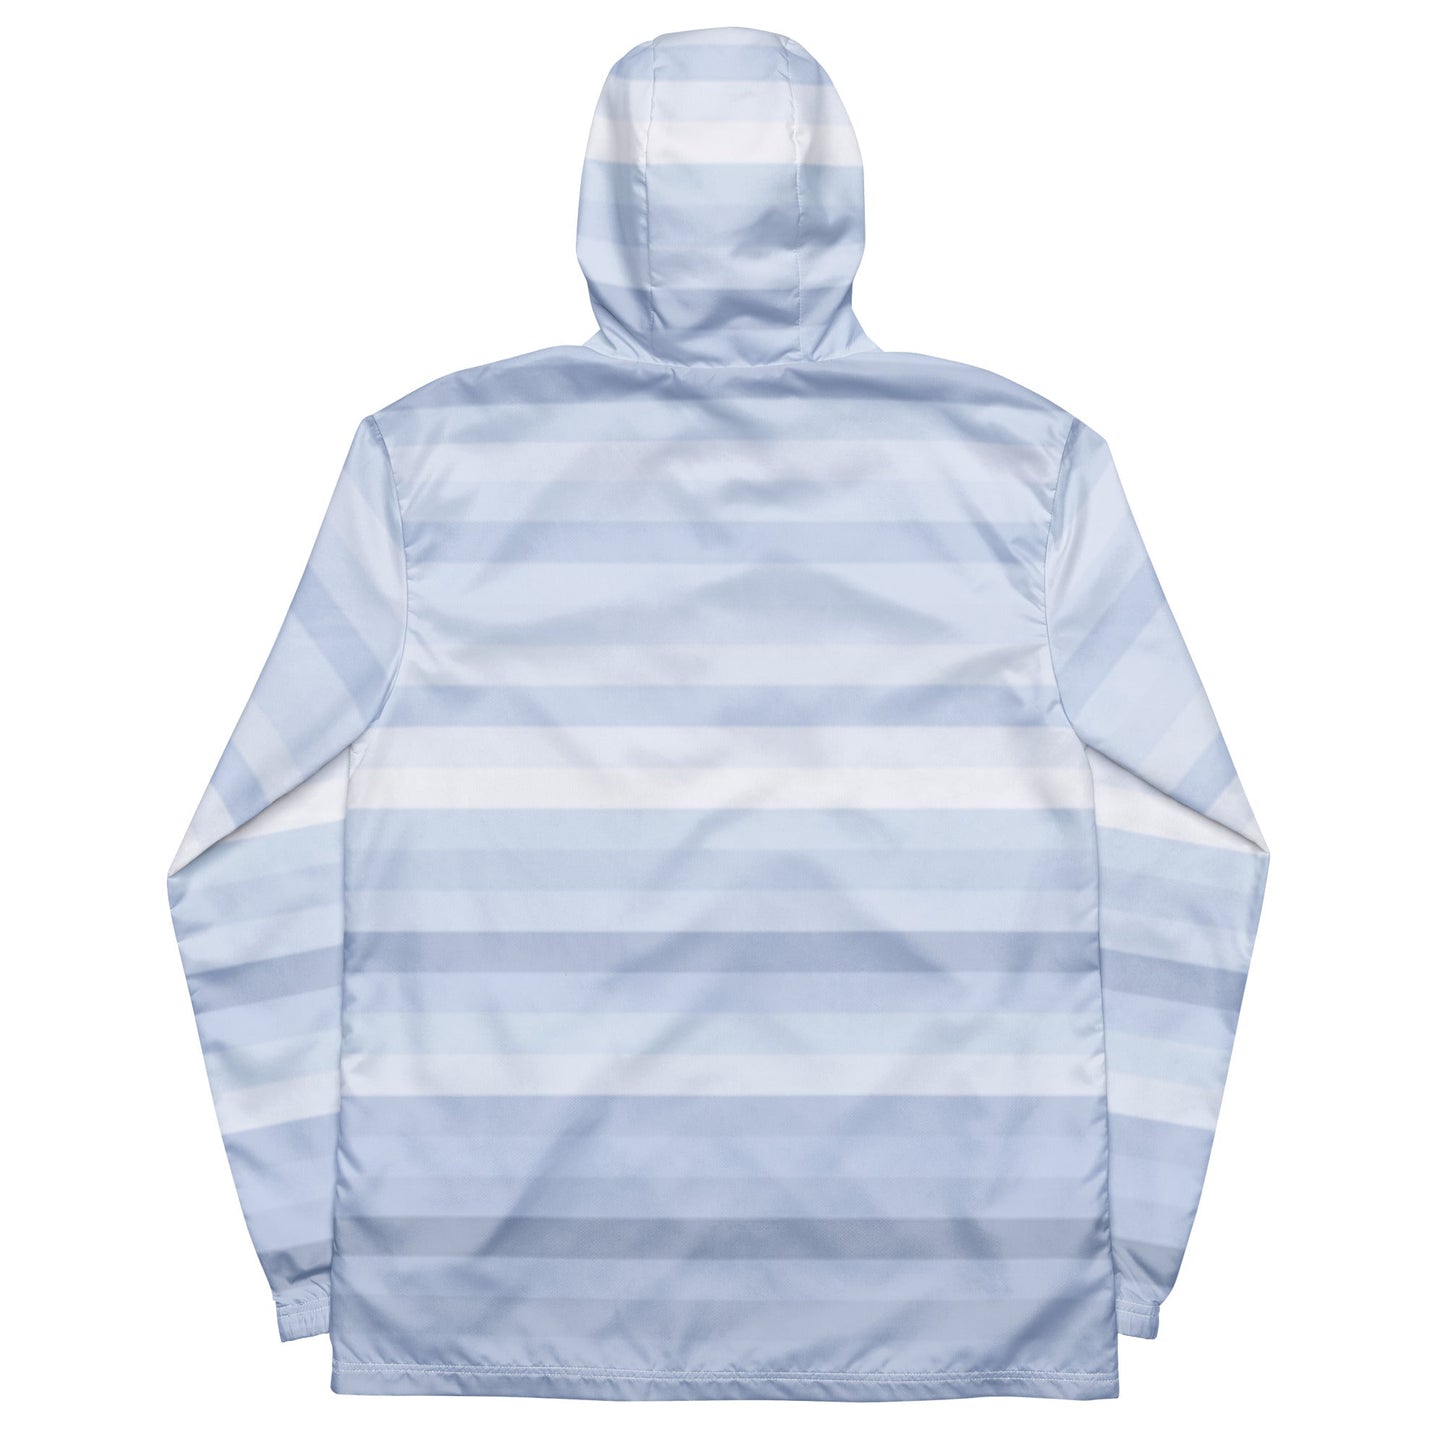 Men’s Tropical Foggy Blue Windbreaker - Tropical Seas Clothing 